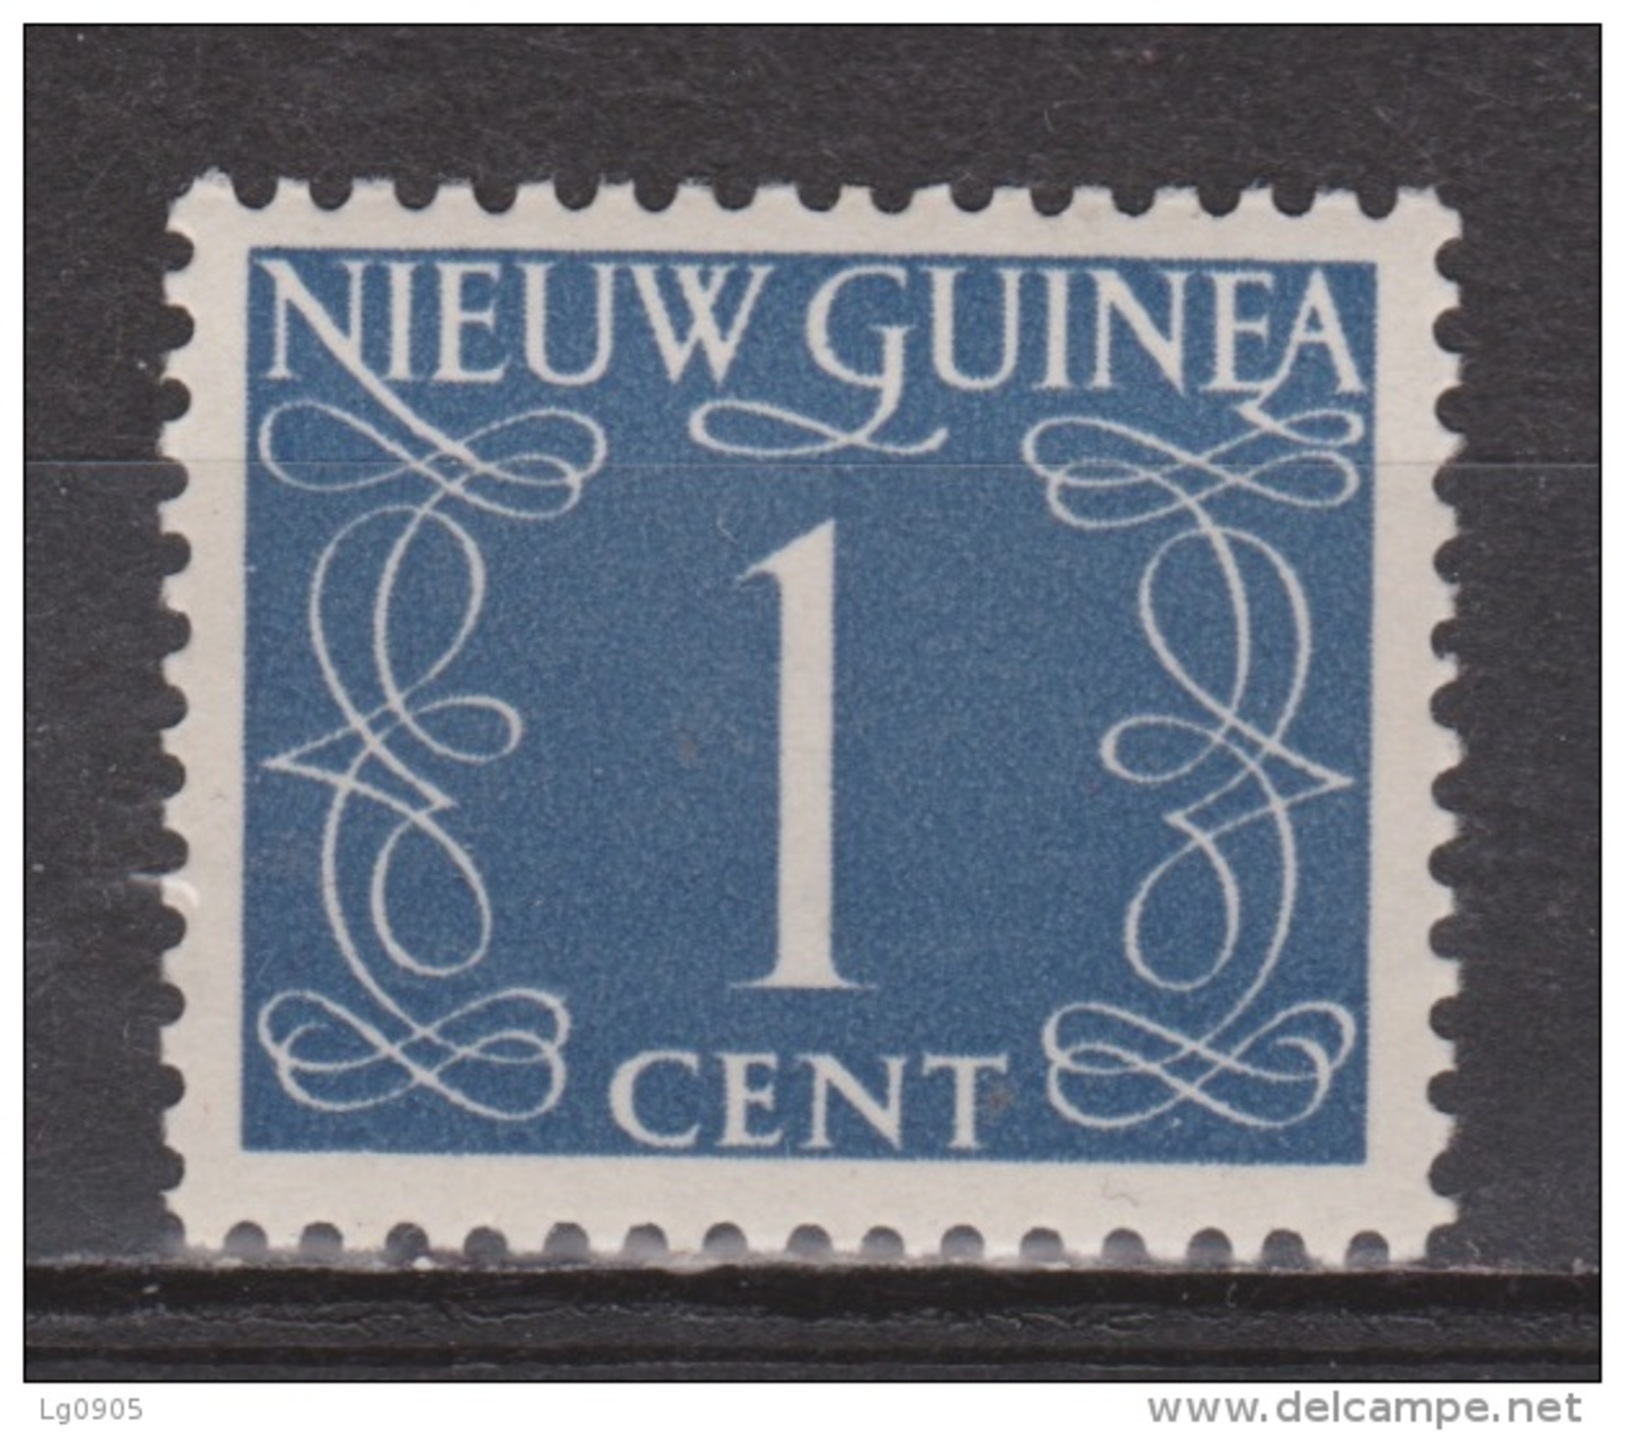 Nederlands Nieuw Guinea 1 MLH ; Cijfer, Cifre 1950 ; NOW ALL STAMPS OF NETHERLANDS NEW GUINEA - Niederländisch-Neuguinea